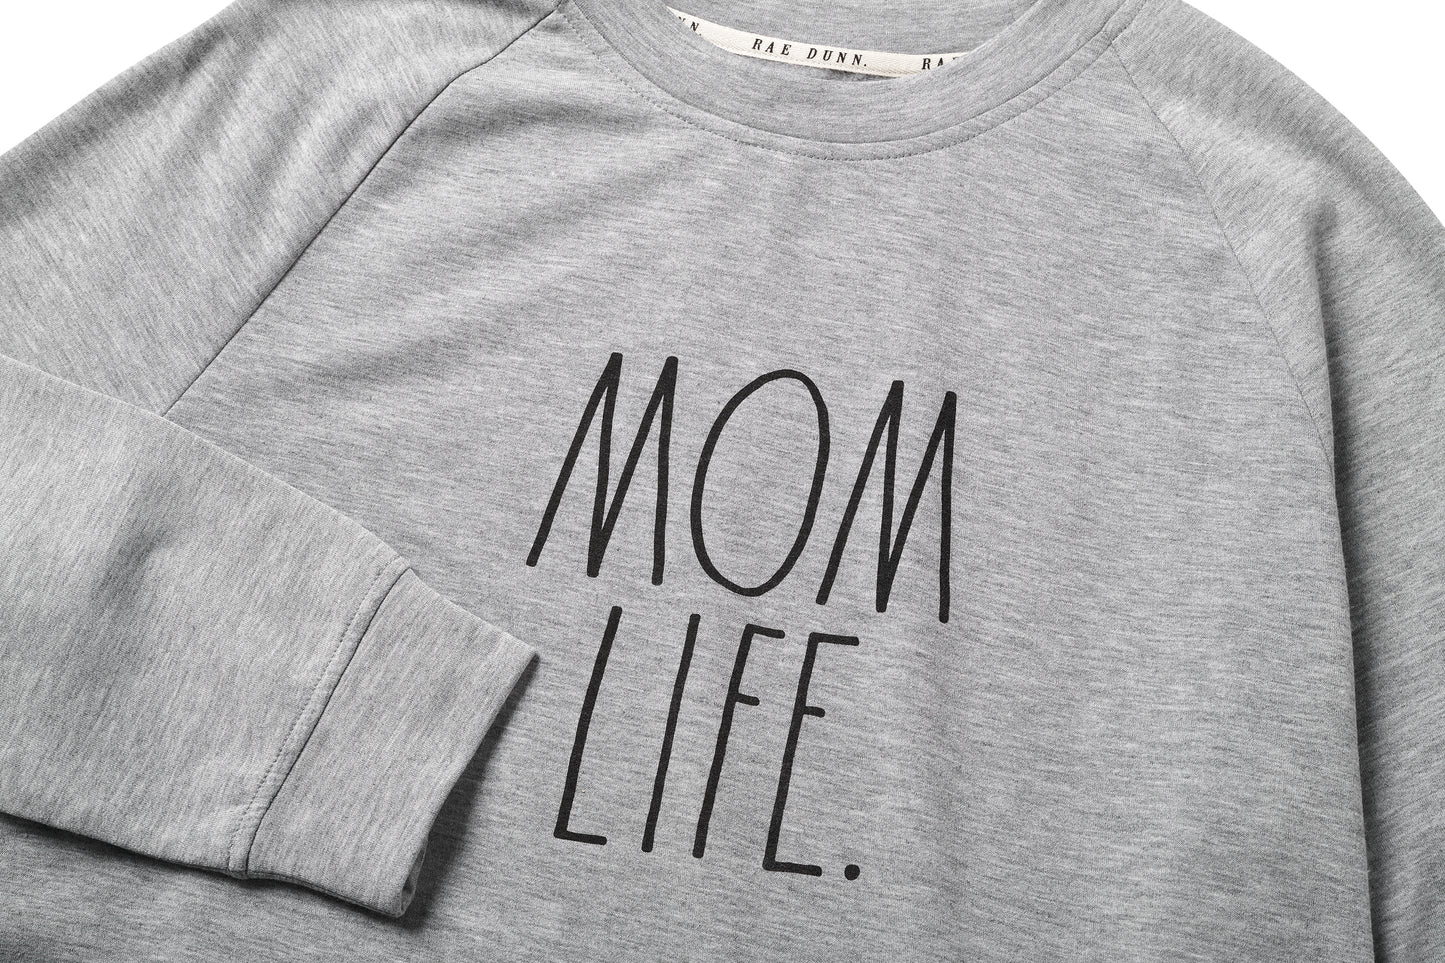 Women's "MOM LIFE" Studio Raglan Sweatshirt and Cozy Socks Set - Rae Dunn Wear - W Sweatshirt